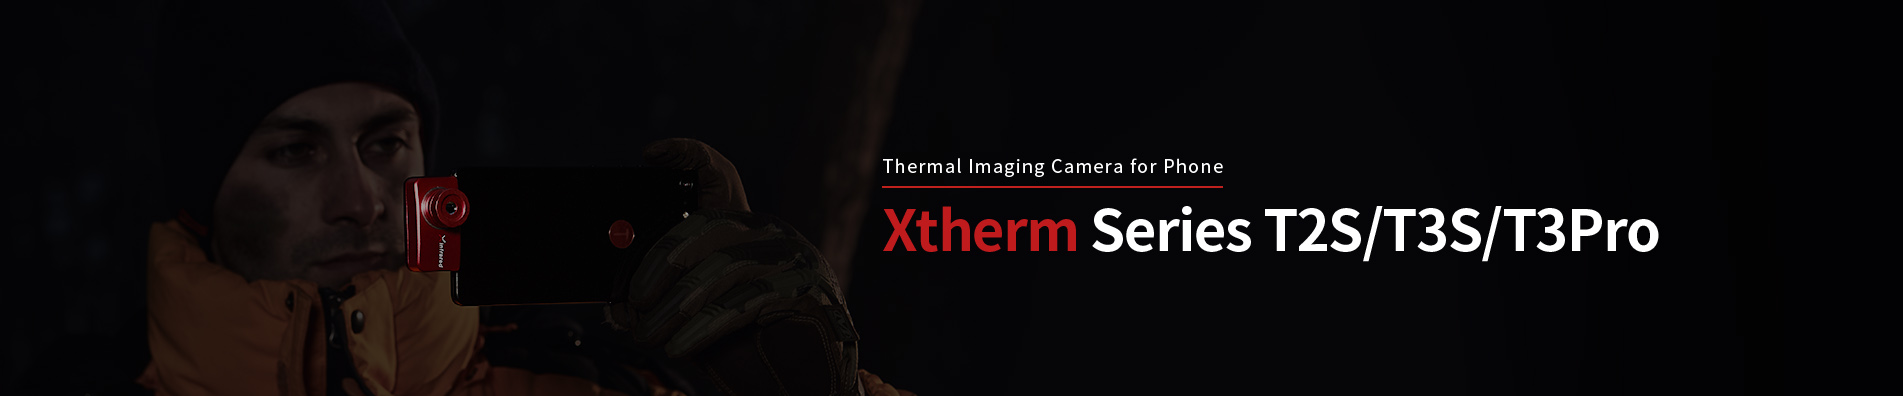 Wärmebildkamera-Xtherm-Serien